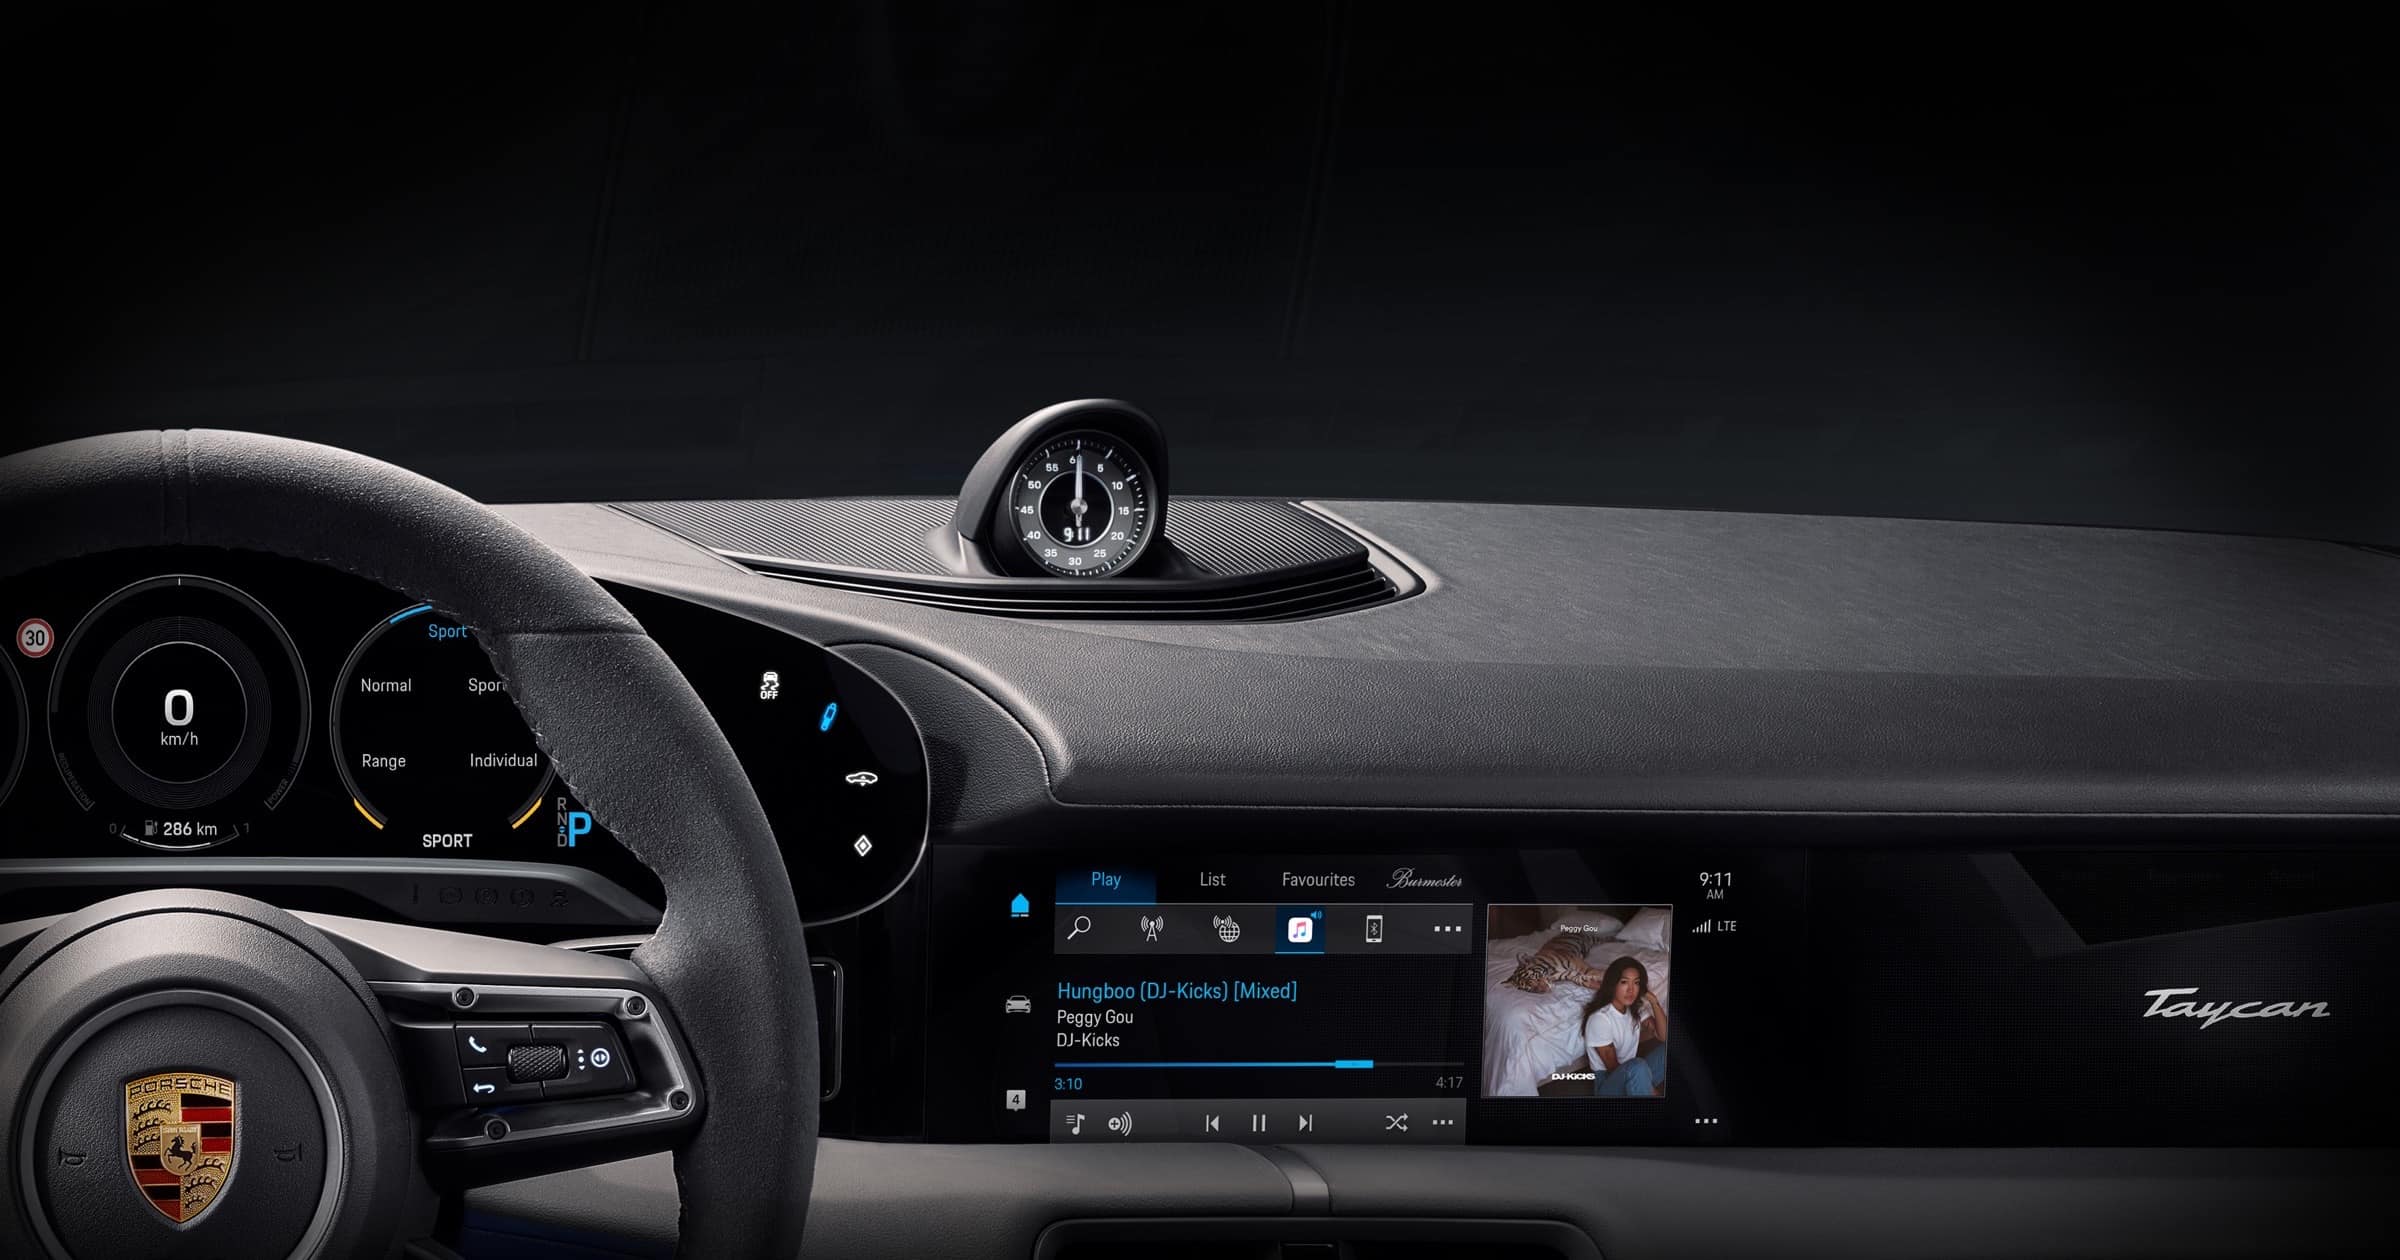 Porsche Integrates Apple Music in ‘Taycan’ Vehicle